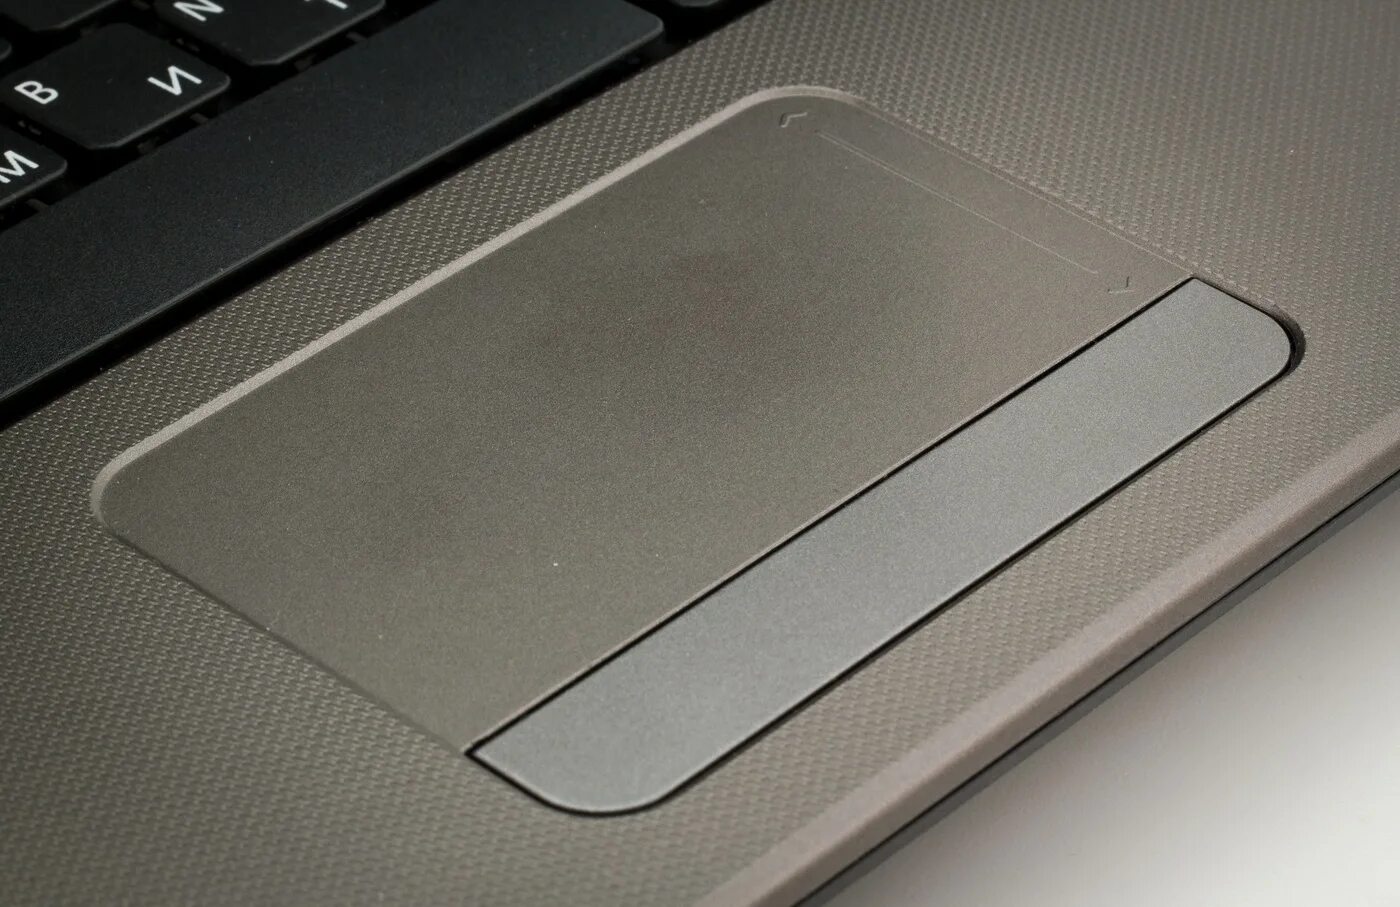 Тачпад honor. Тачпад 4340s. Тачпад для ноутбука Acer 5560g. Микро тачпад для ноутбука. Тачпад Glossy.